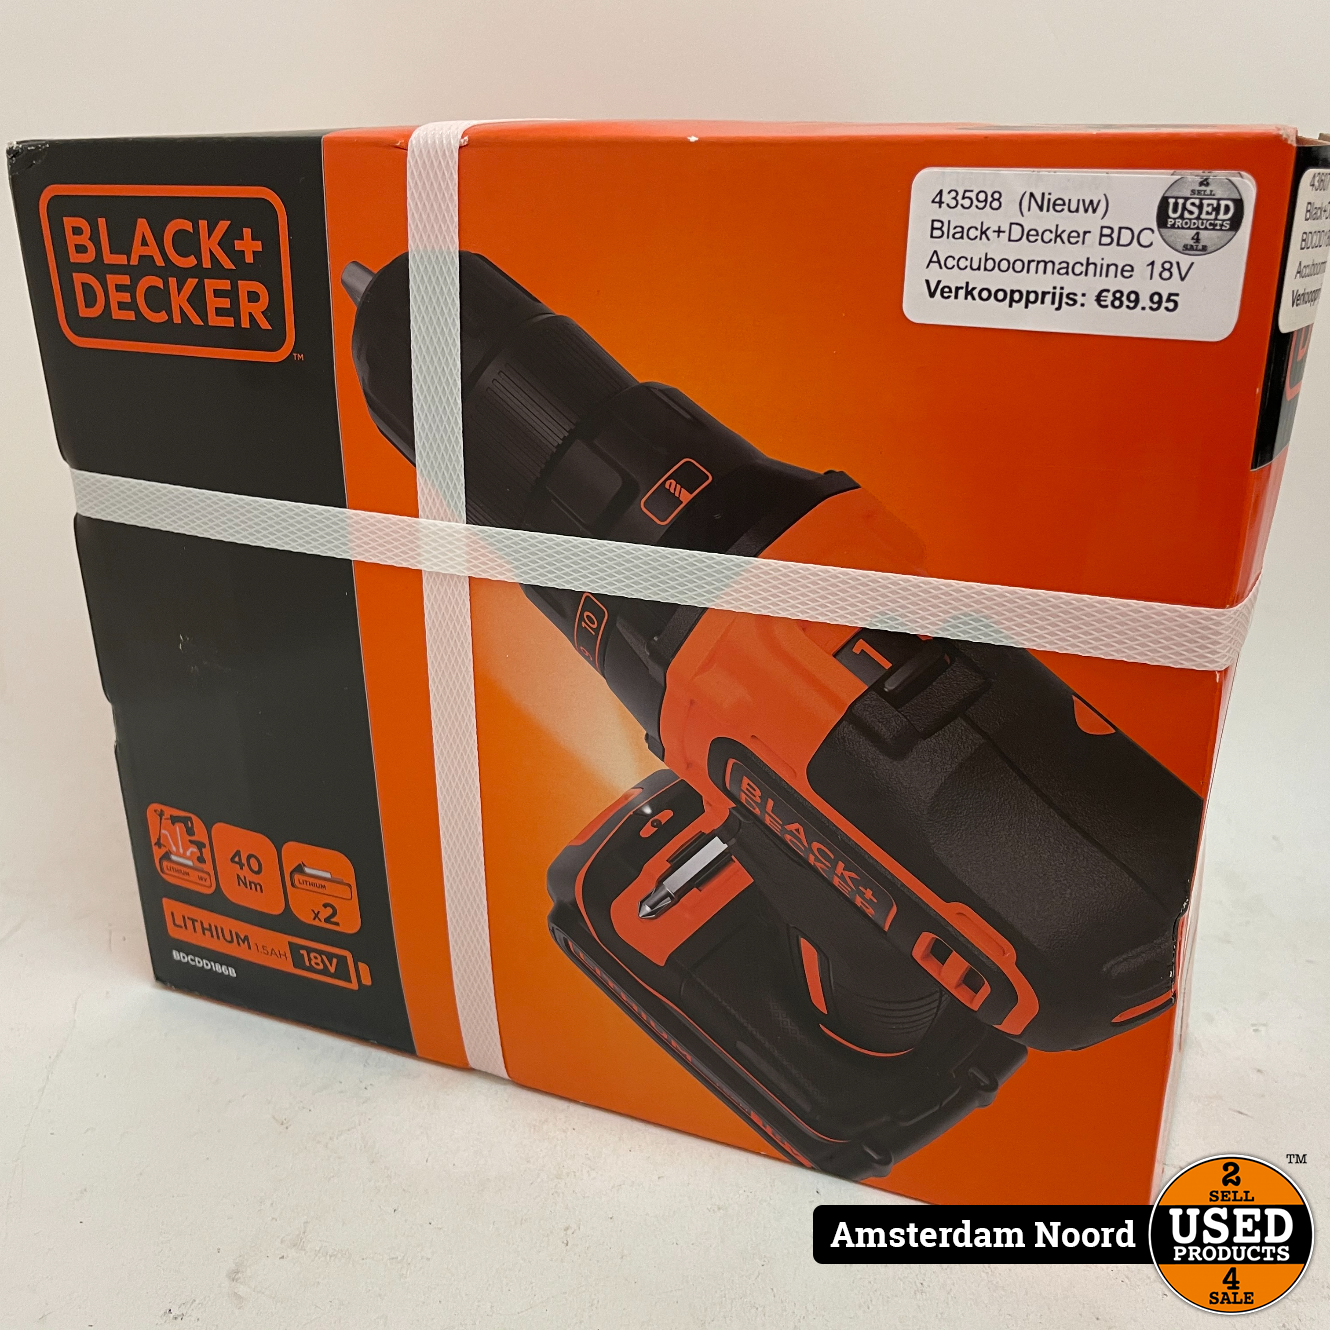 Black+Decker BDCDD186K-QW Accuboormachine 18V (Nieuw) - Products Amsterdam Noord